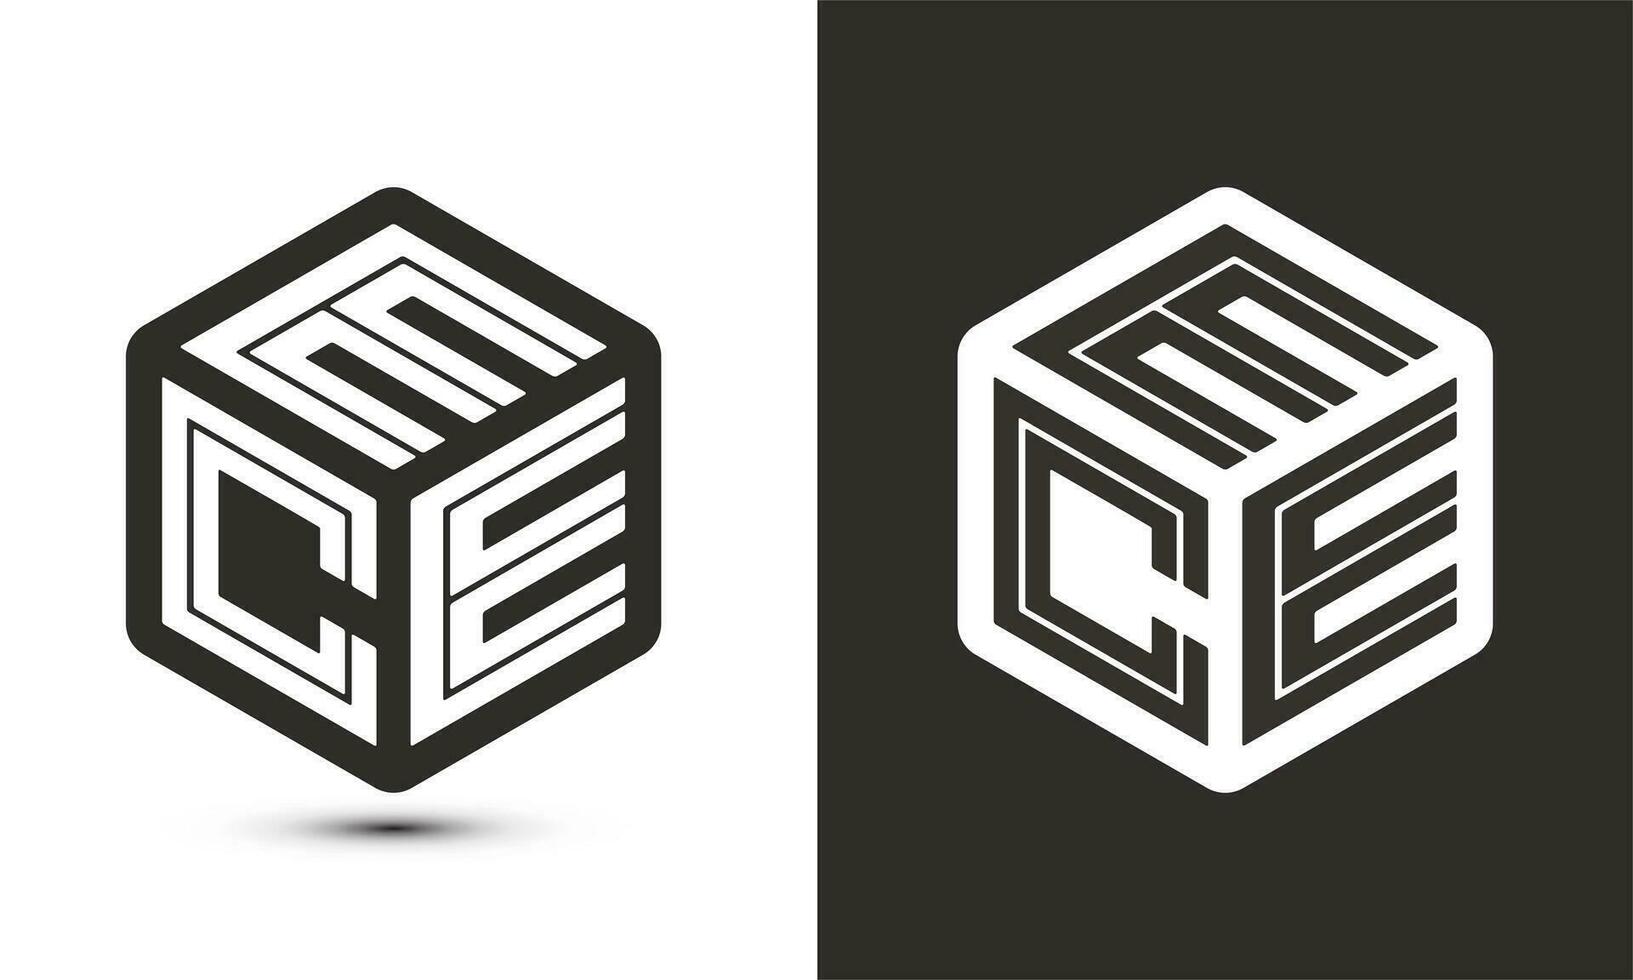 qmc letra logo diseño con ilustrador cubo logo, vector logo moderno alfabeto fuente superposición estilo.